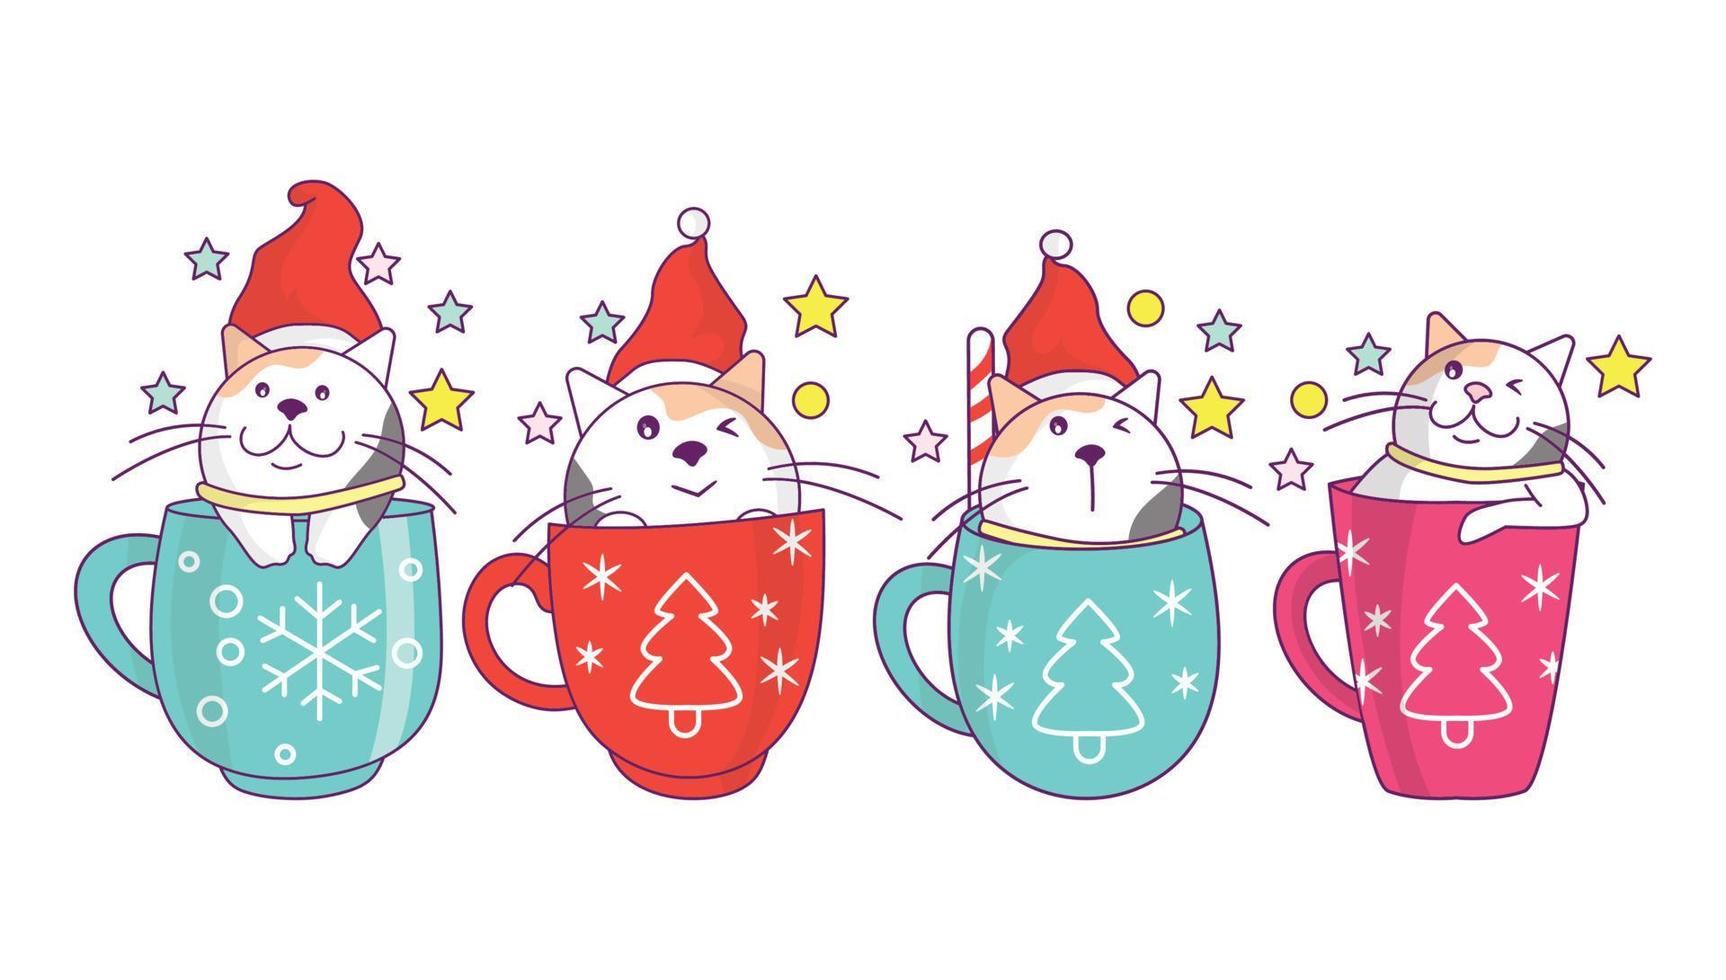 colección de lindo gato en taza de bebida de navidad, café o té con estilo de dibujos animados de garabatos. vector